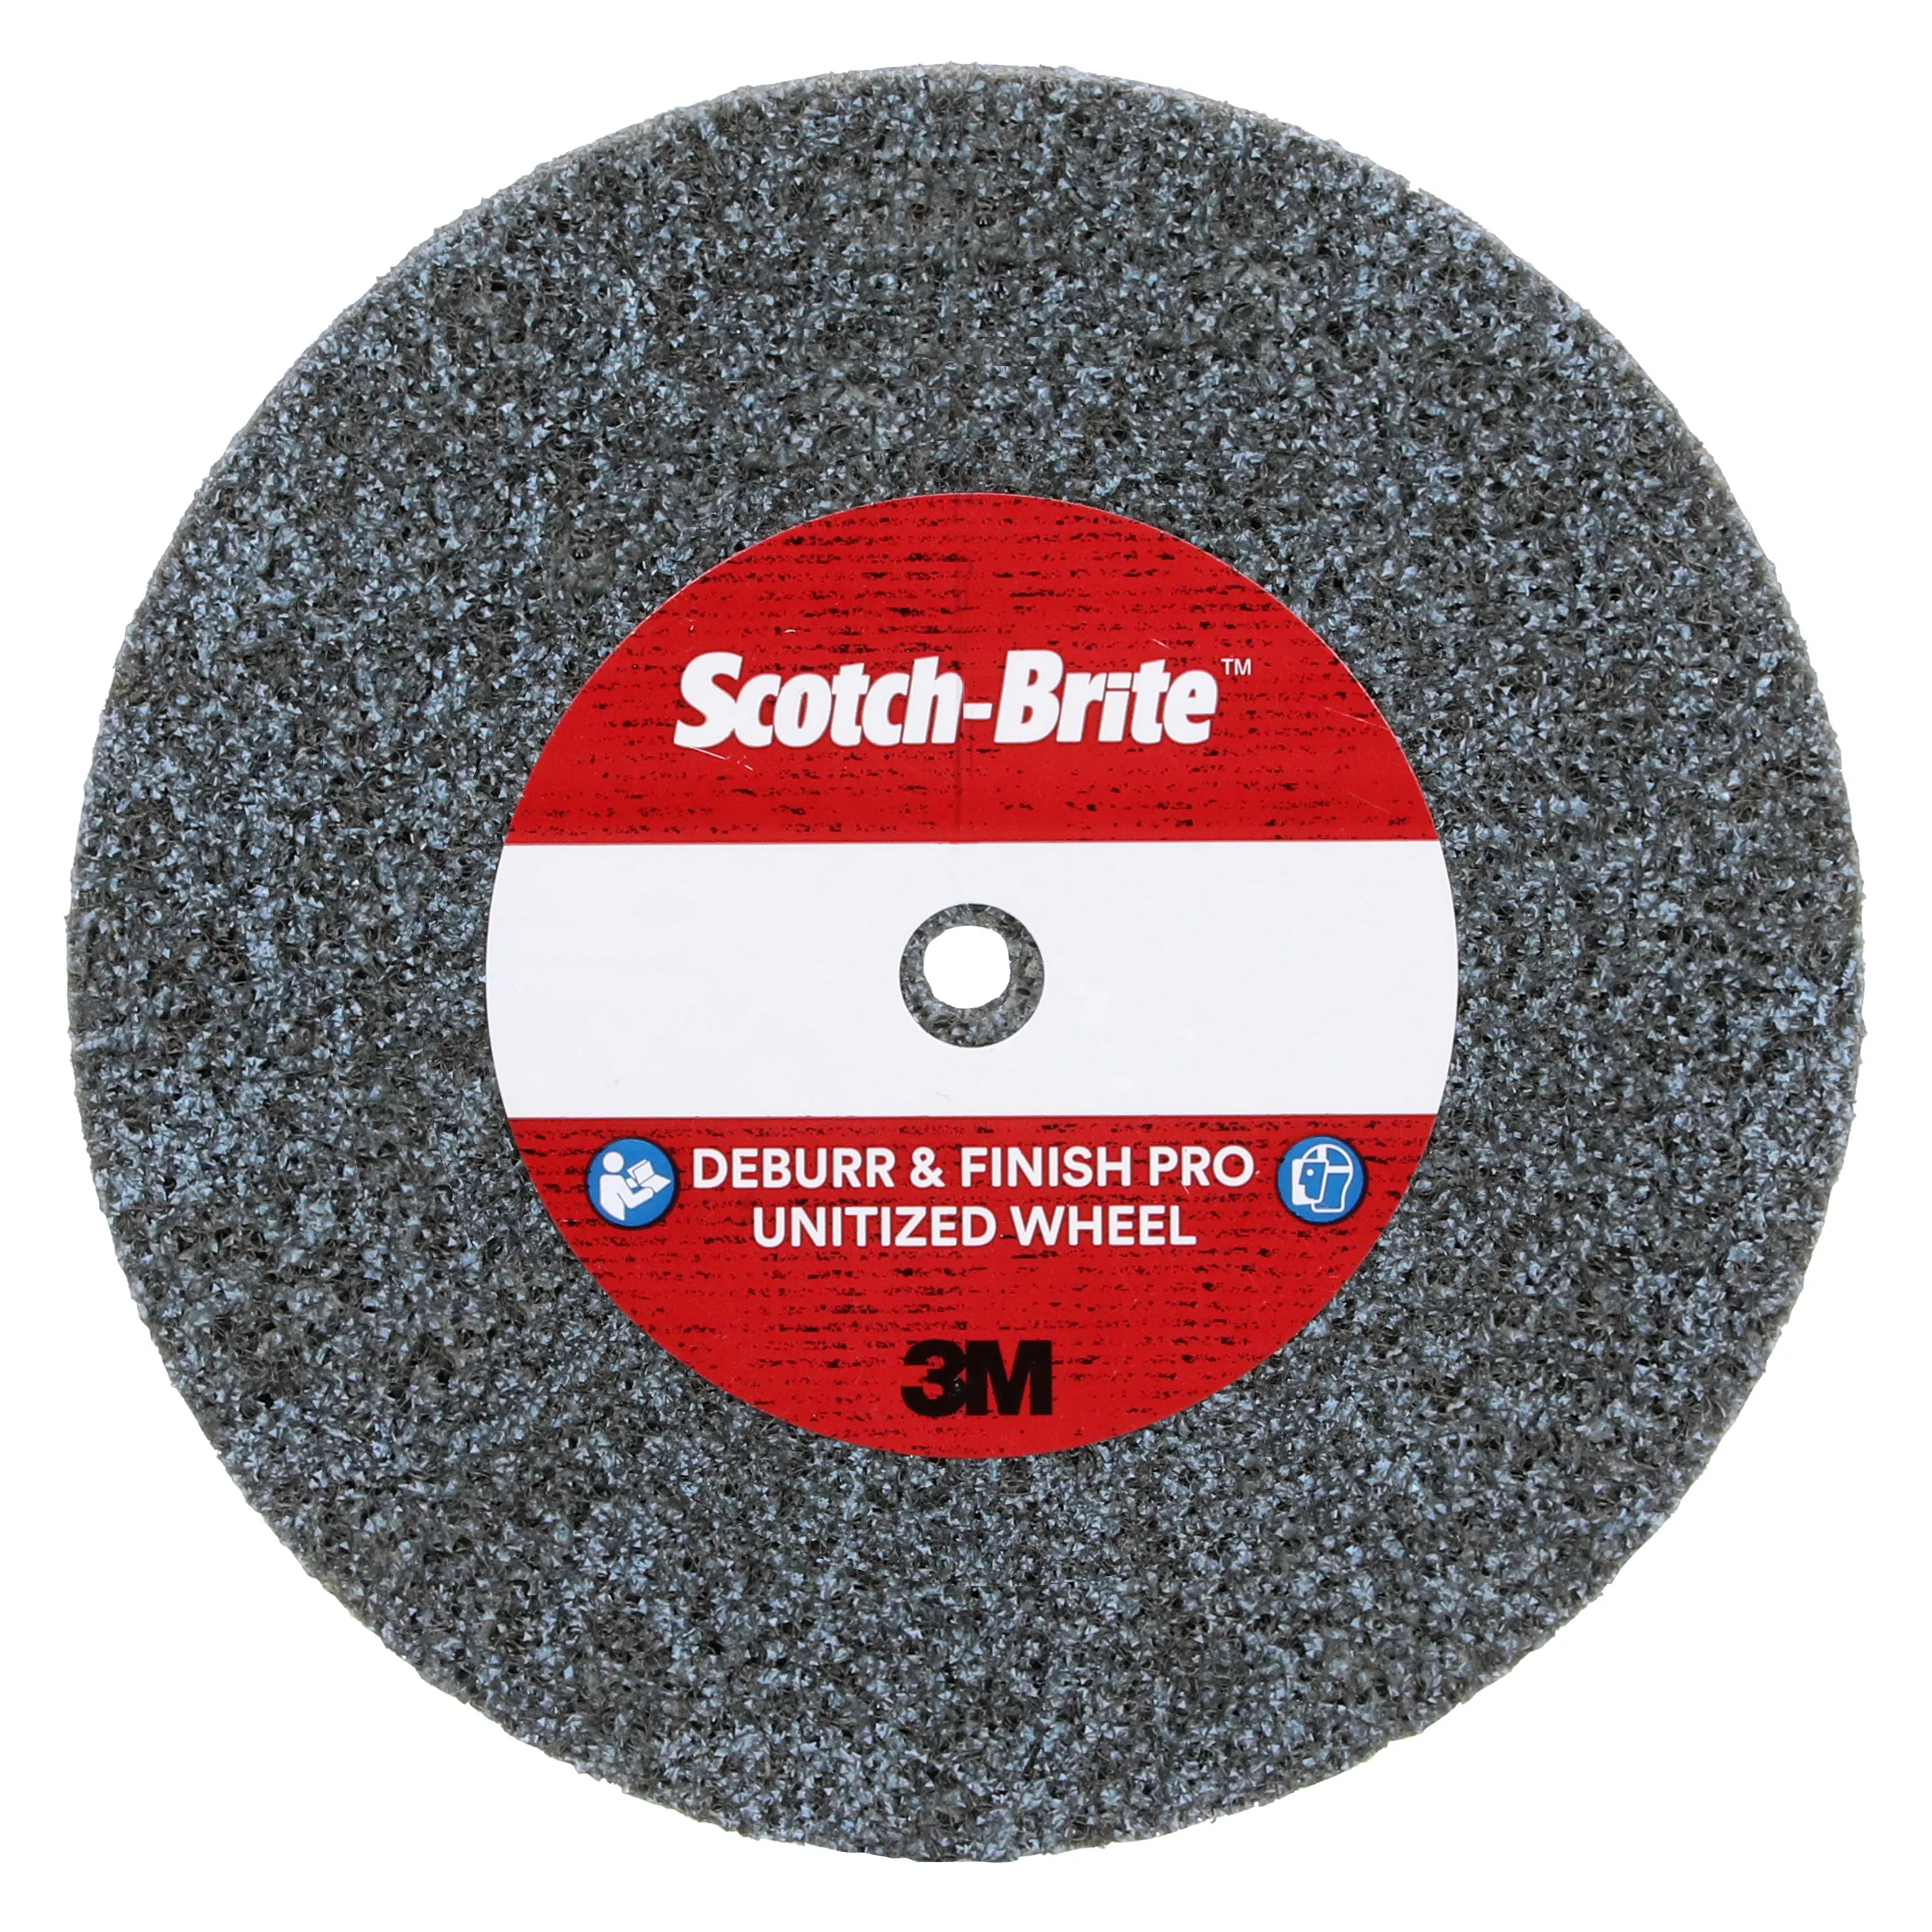 SKU 7010329496 | Scotch-Brite™ Deburr & Finish Pro Unitized Wheel